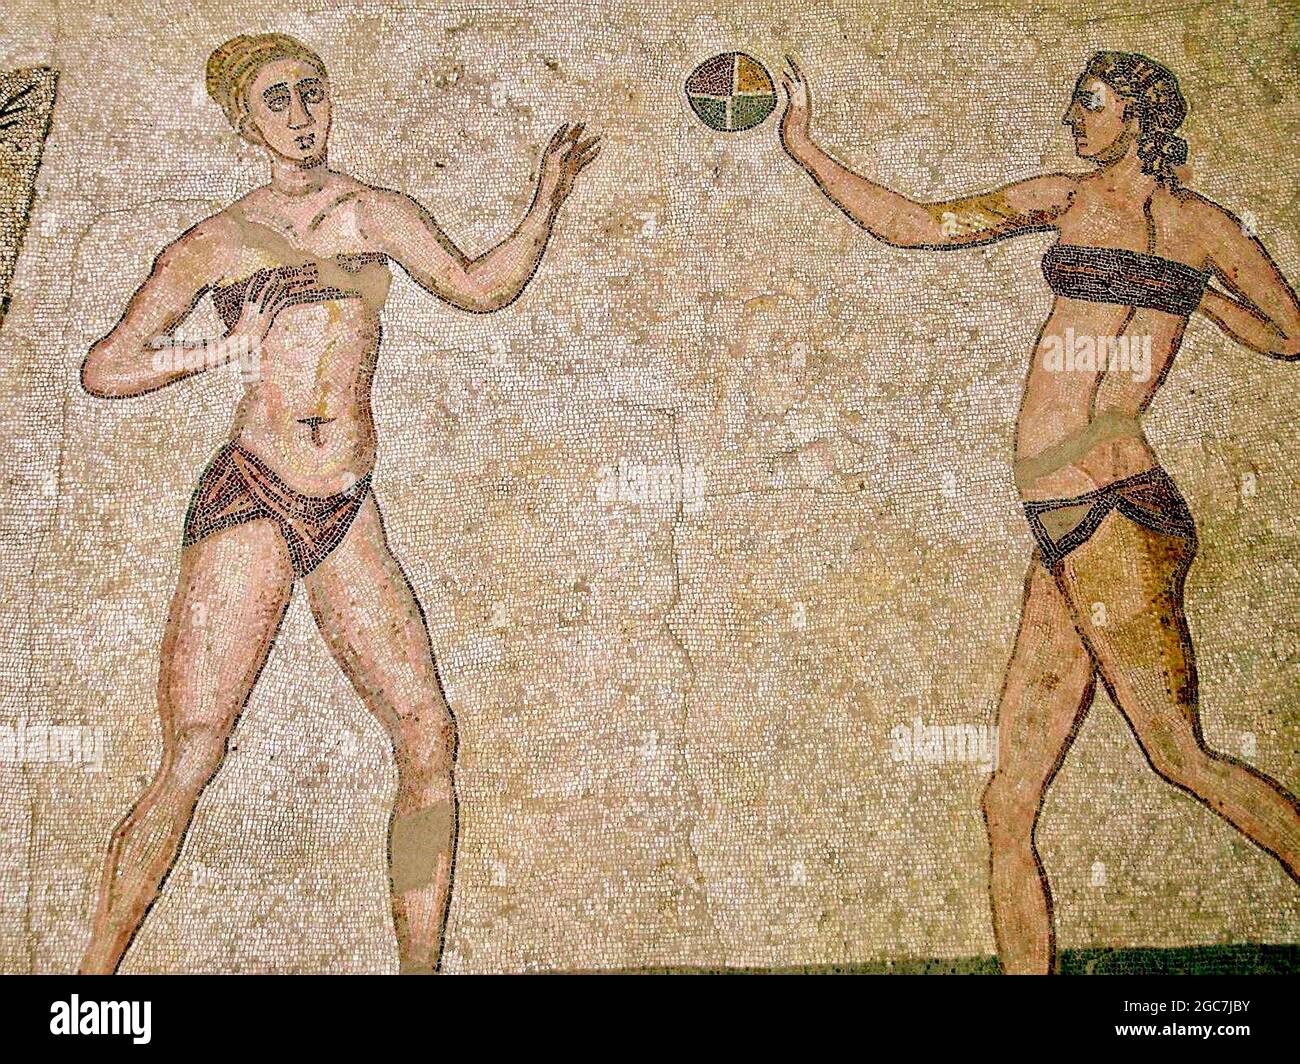 Roman Bikini Mosaics at The Villa Romana del Casale, Sicily, Italy. Early depiction of Roman women wearing bikinis from early 4th century AD. Stock Photo